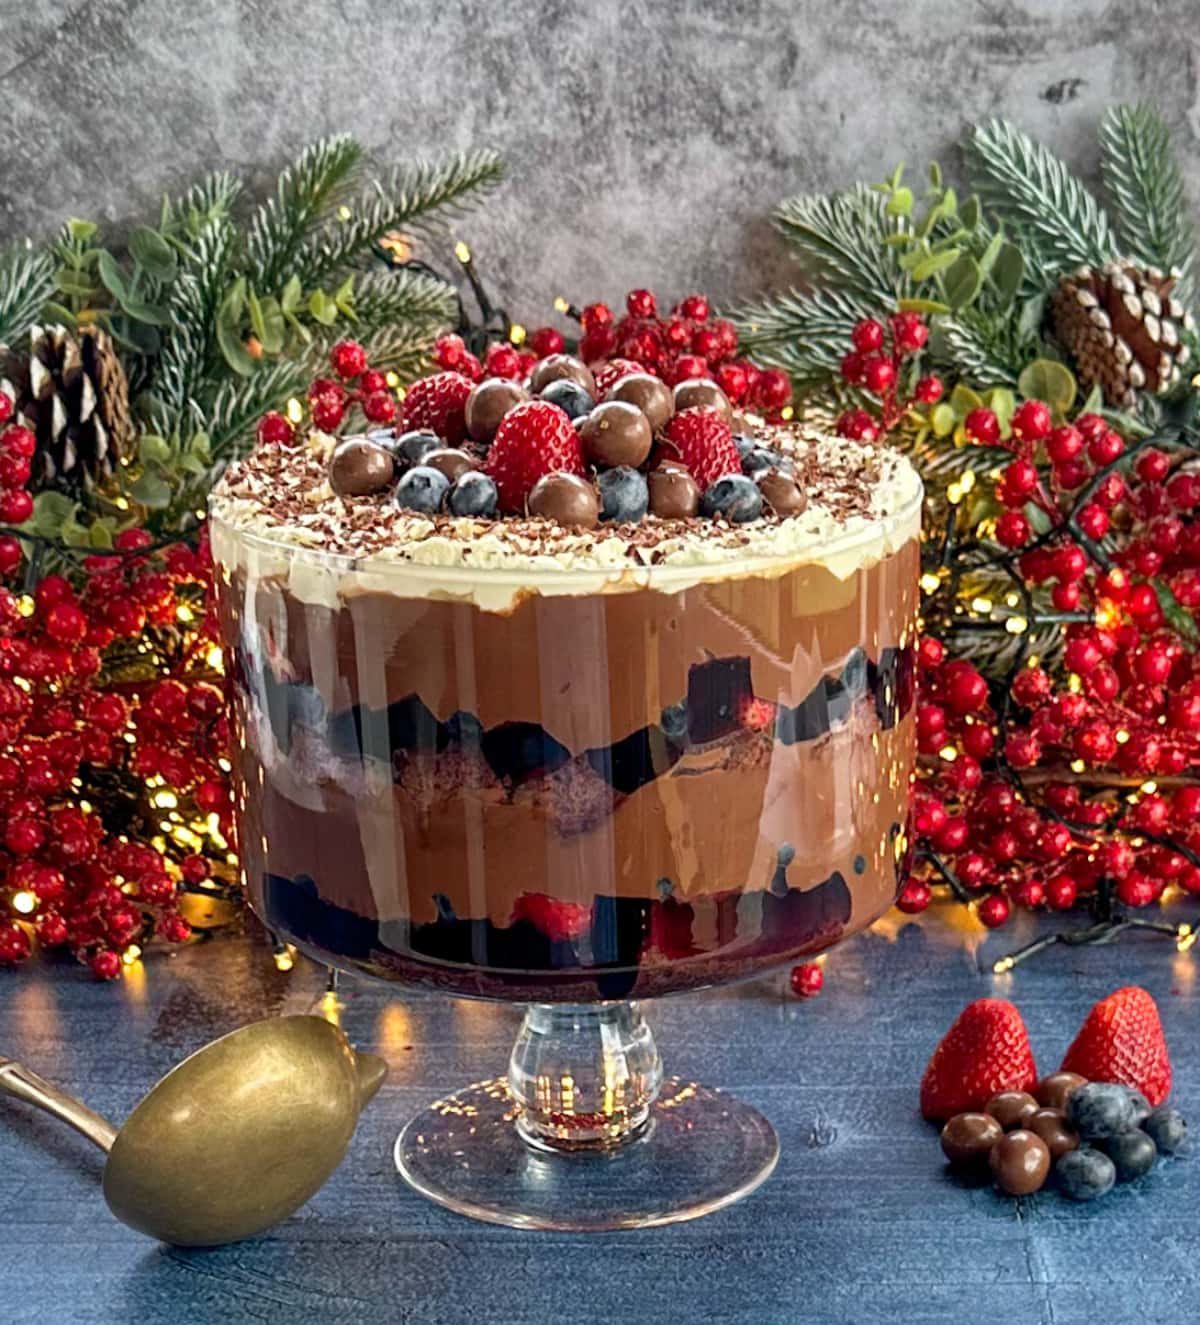 Chocolate layered trifle with chocolate custard set against a festive Christmas backdrop